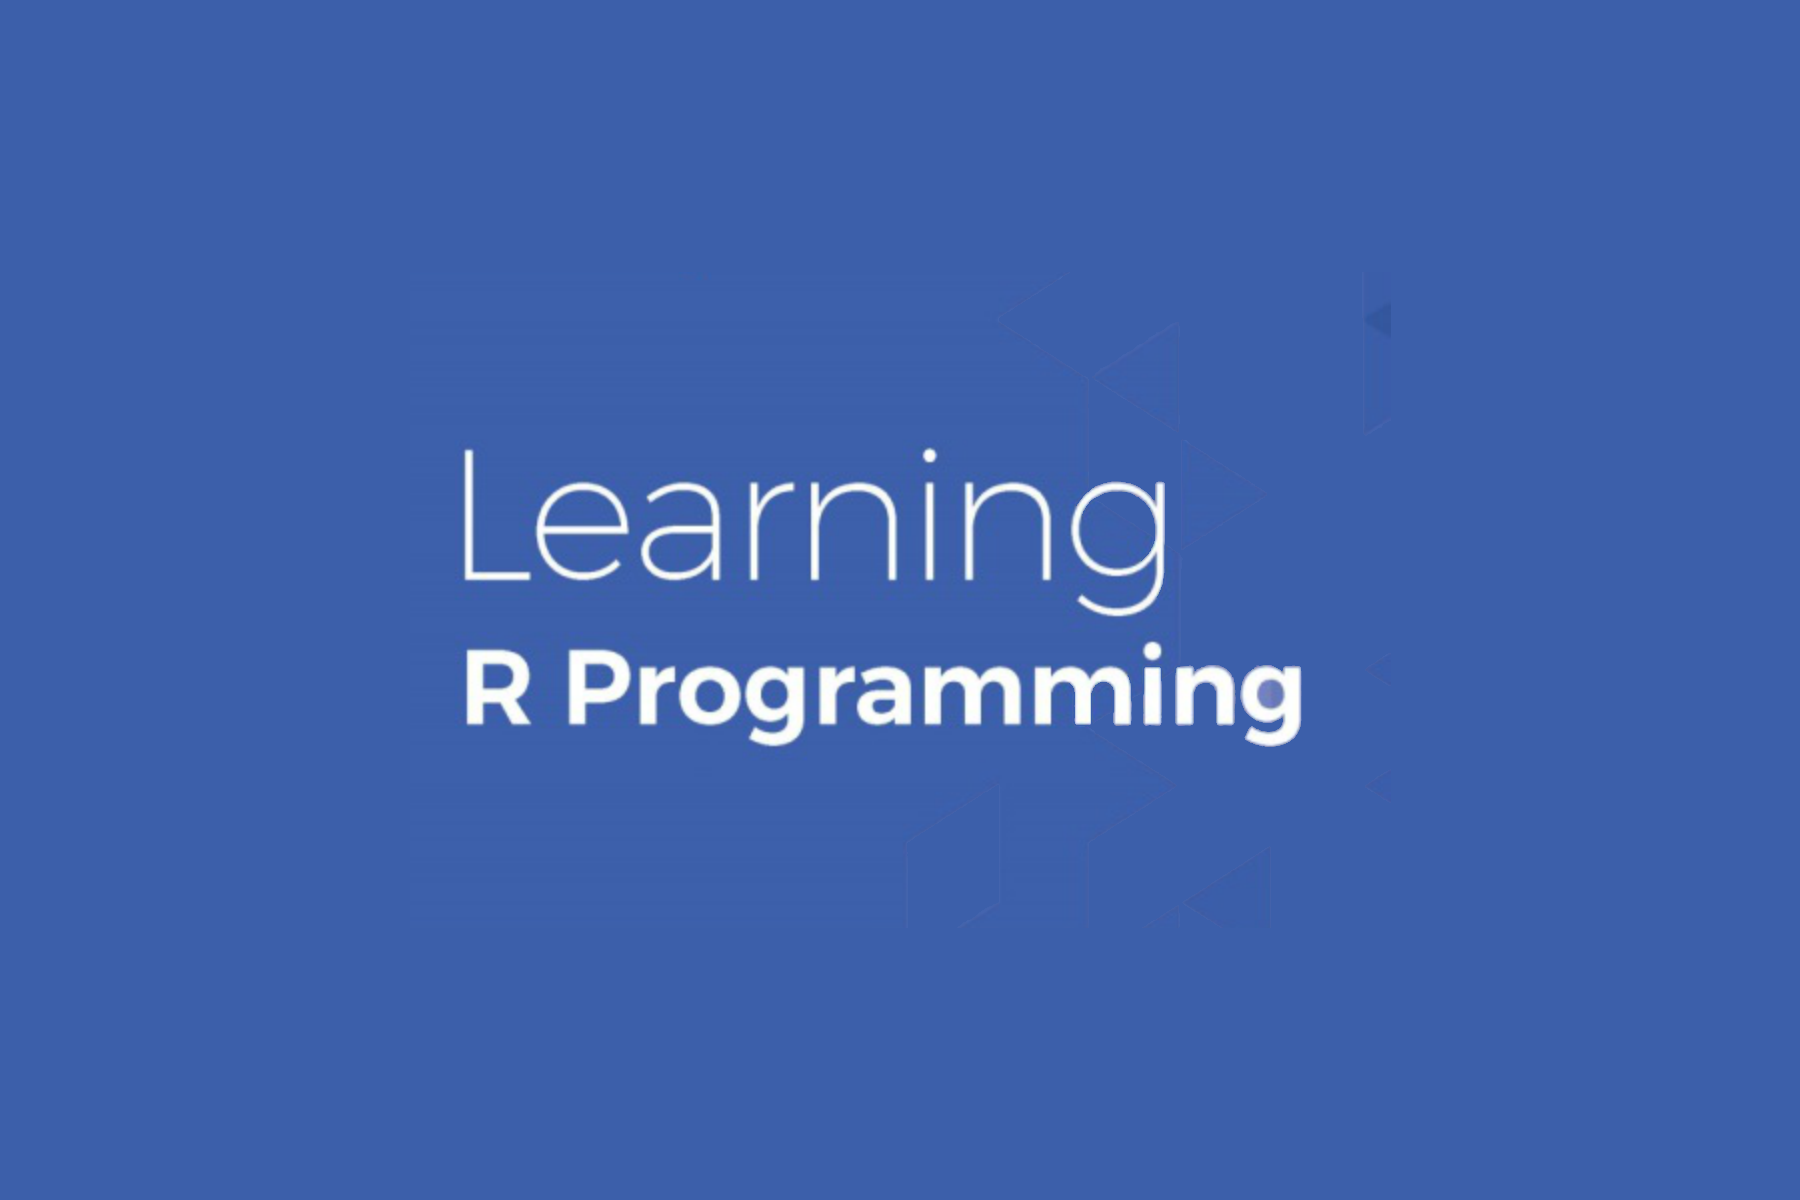 R Programming Training in Chennai